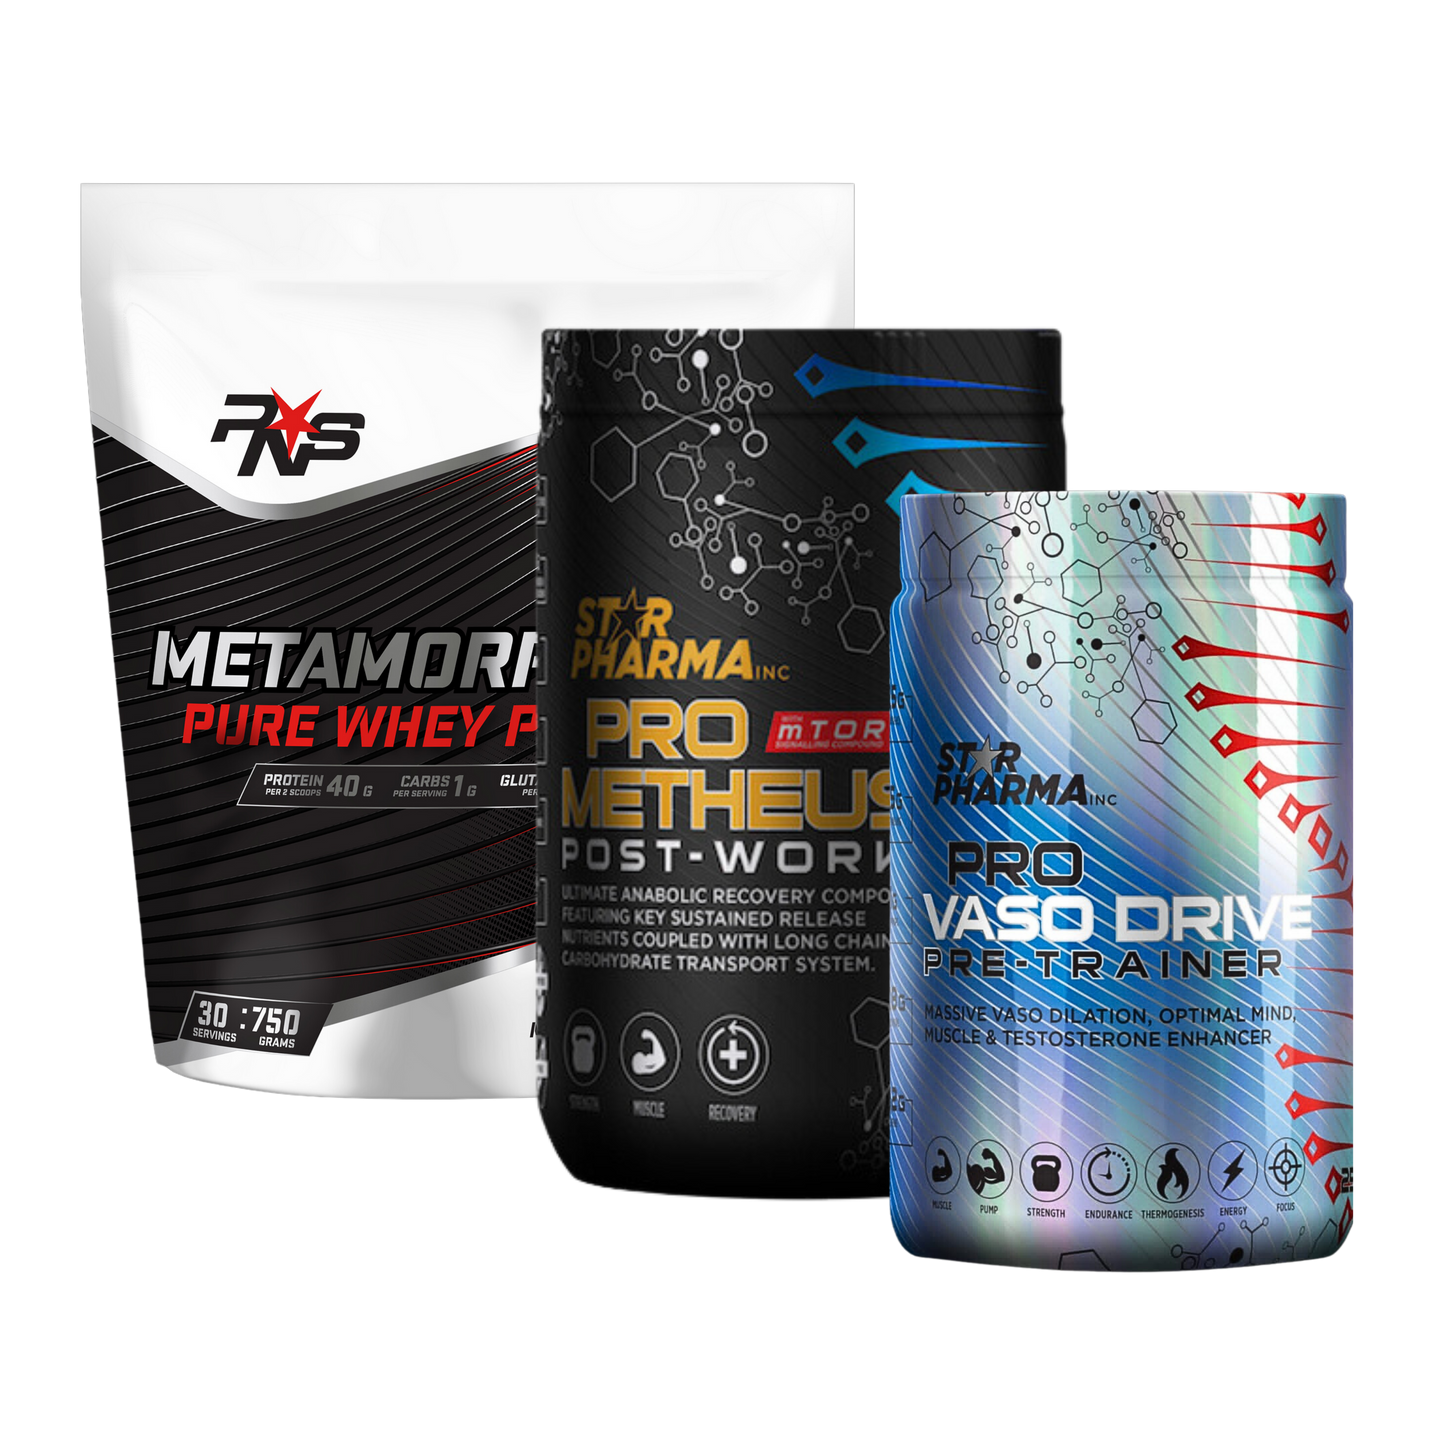 Metamorphosis Whey Protein + Pro Metheus Post-Workout + Pro Vaso Drive Pre-Trainer